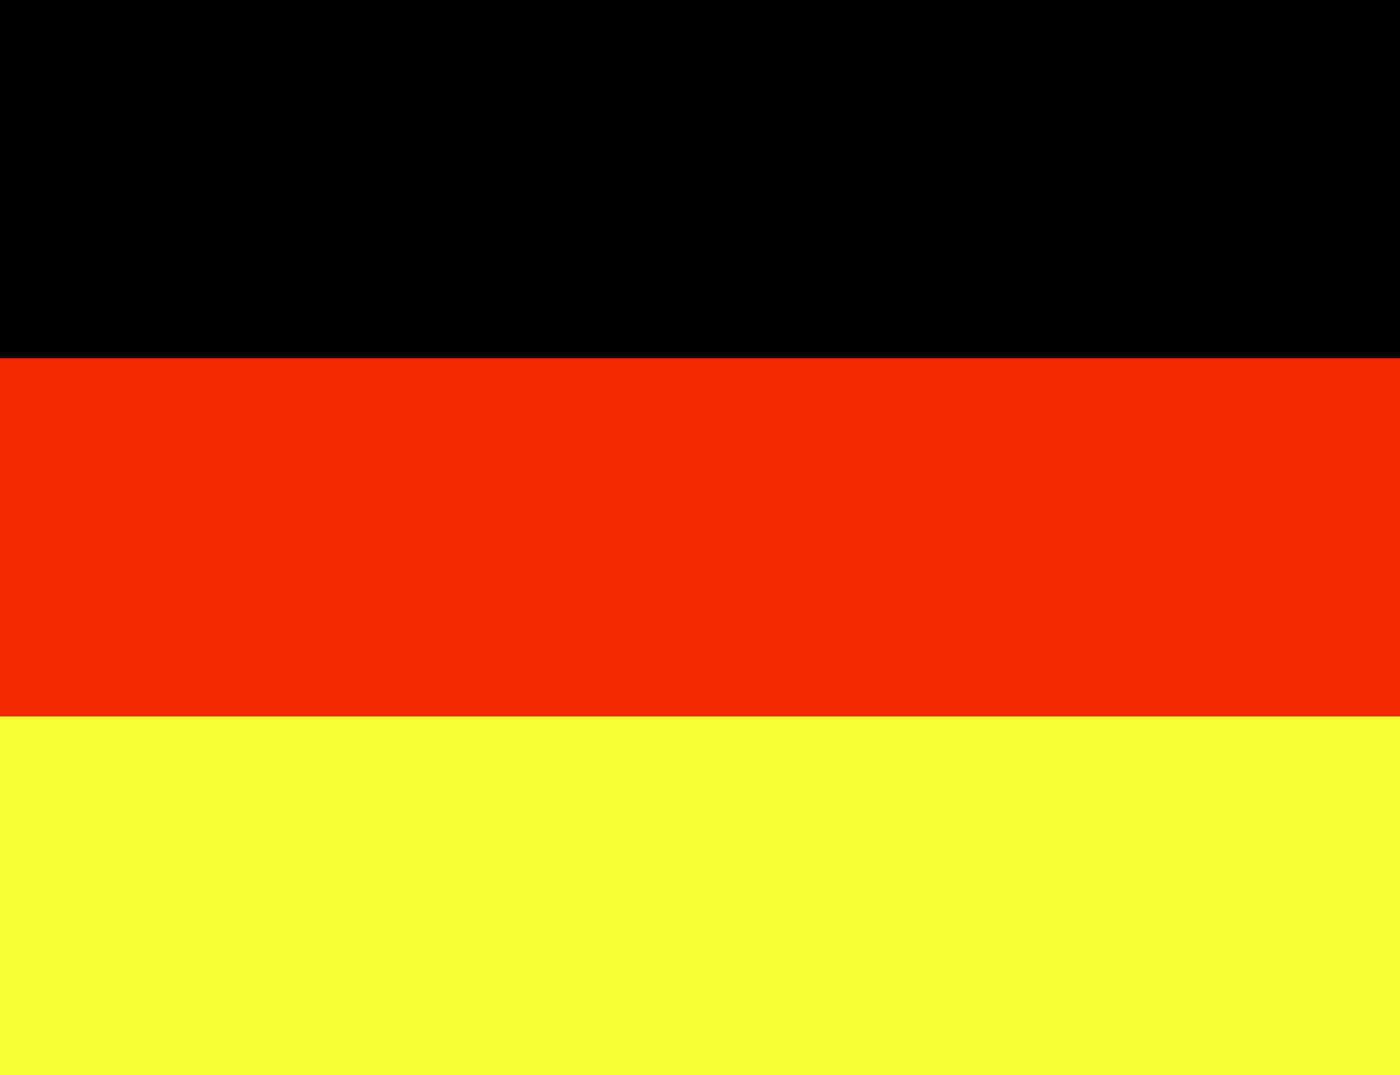 Graafix Germany Flag Wallpapers Afalchi Free images wallpape [afalchi.blogspot.com]